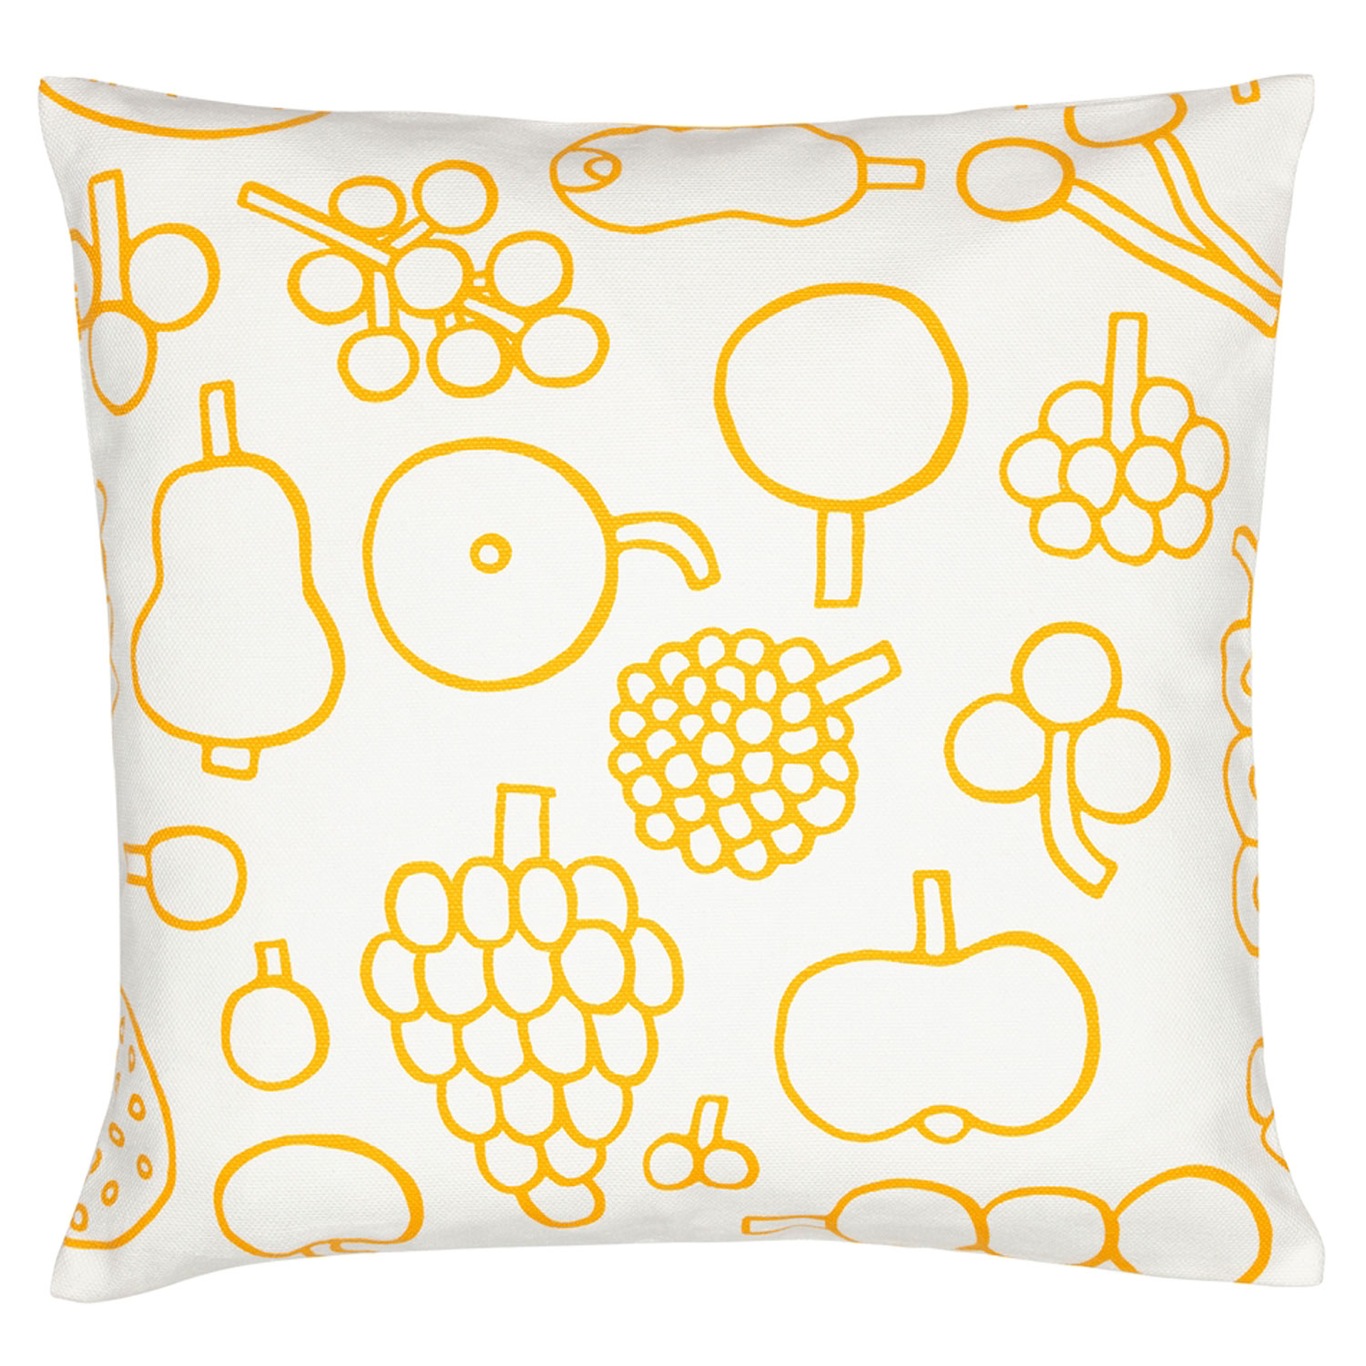 Oiva Toikka Collection Cushion Cover 47x47 cm, Frutta Yellow